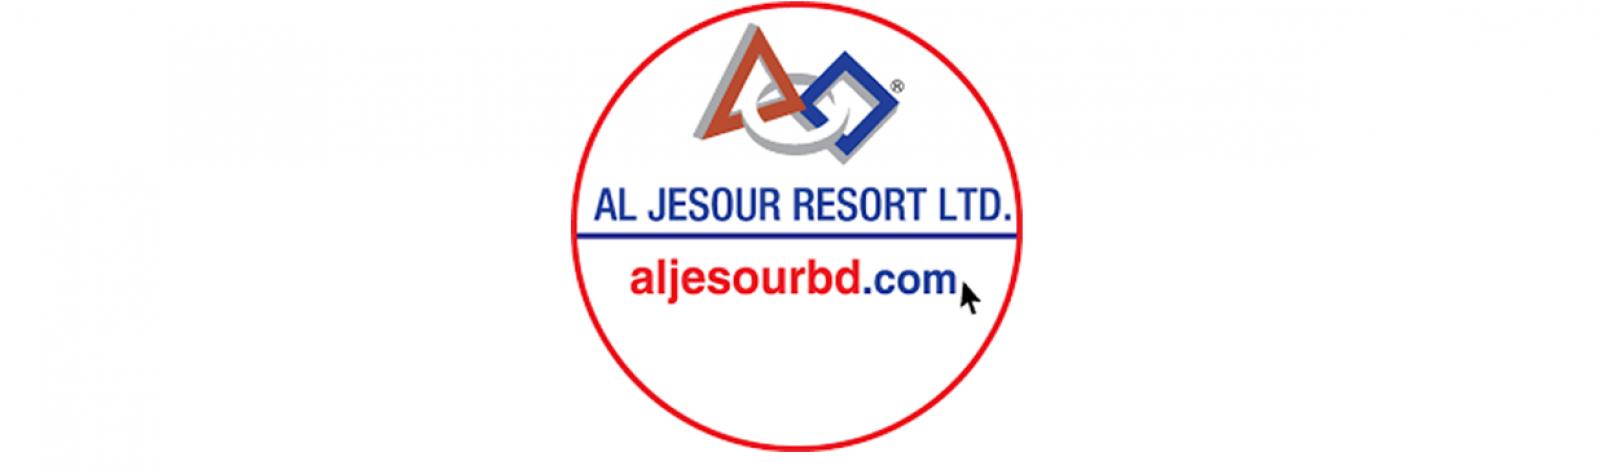 Al-Jesour Resort Ltd. banner